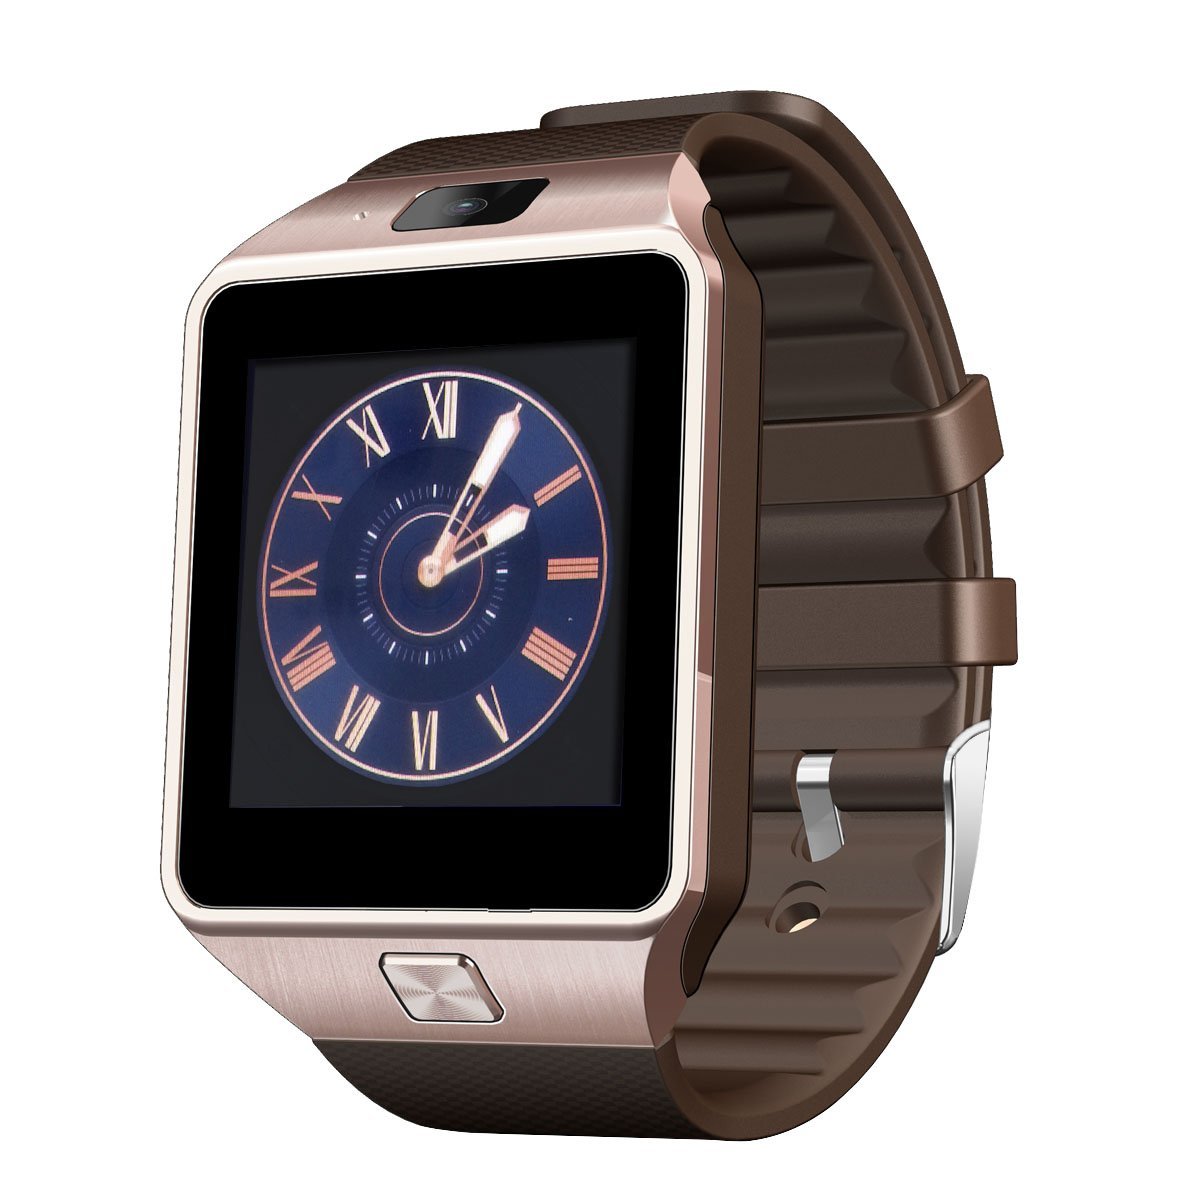 Otium Gear S Bluetooth Smart Watch WristWatch Sim insert anti-lost Call reminder Phone Mate Reviews